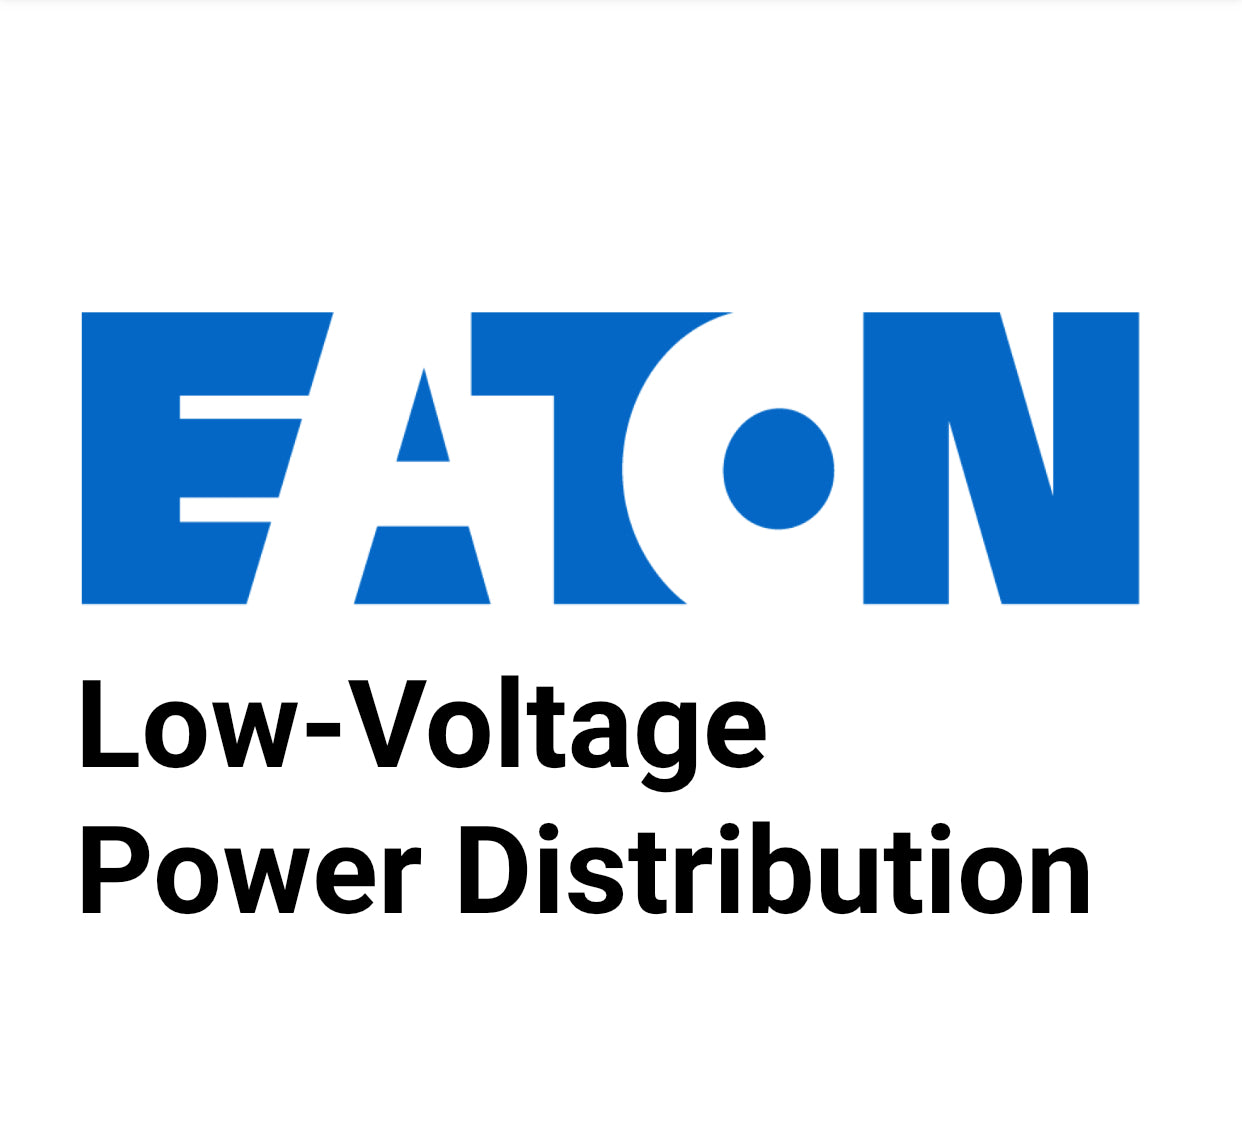 EATON LOW-VOLTAGE POWER DISTRIBUTION